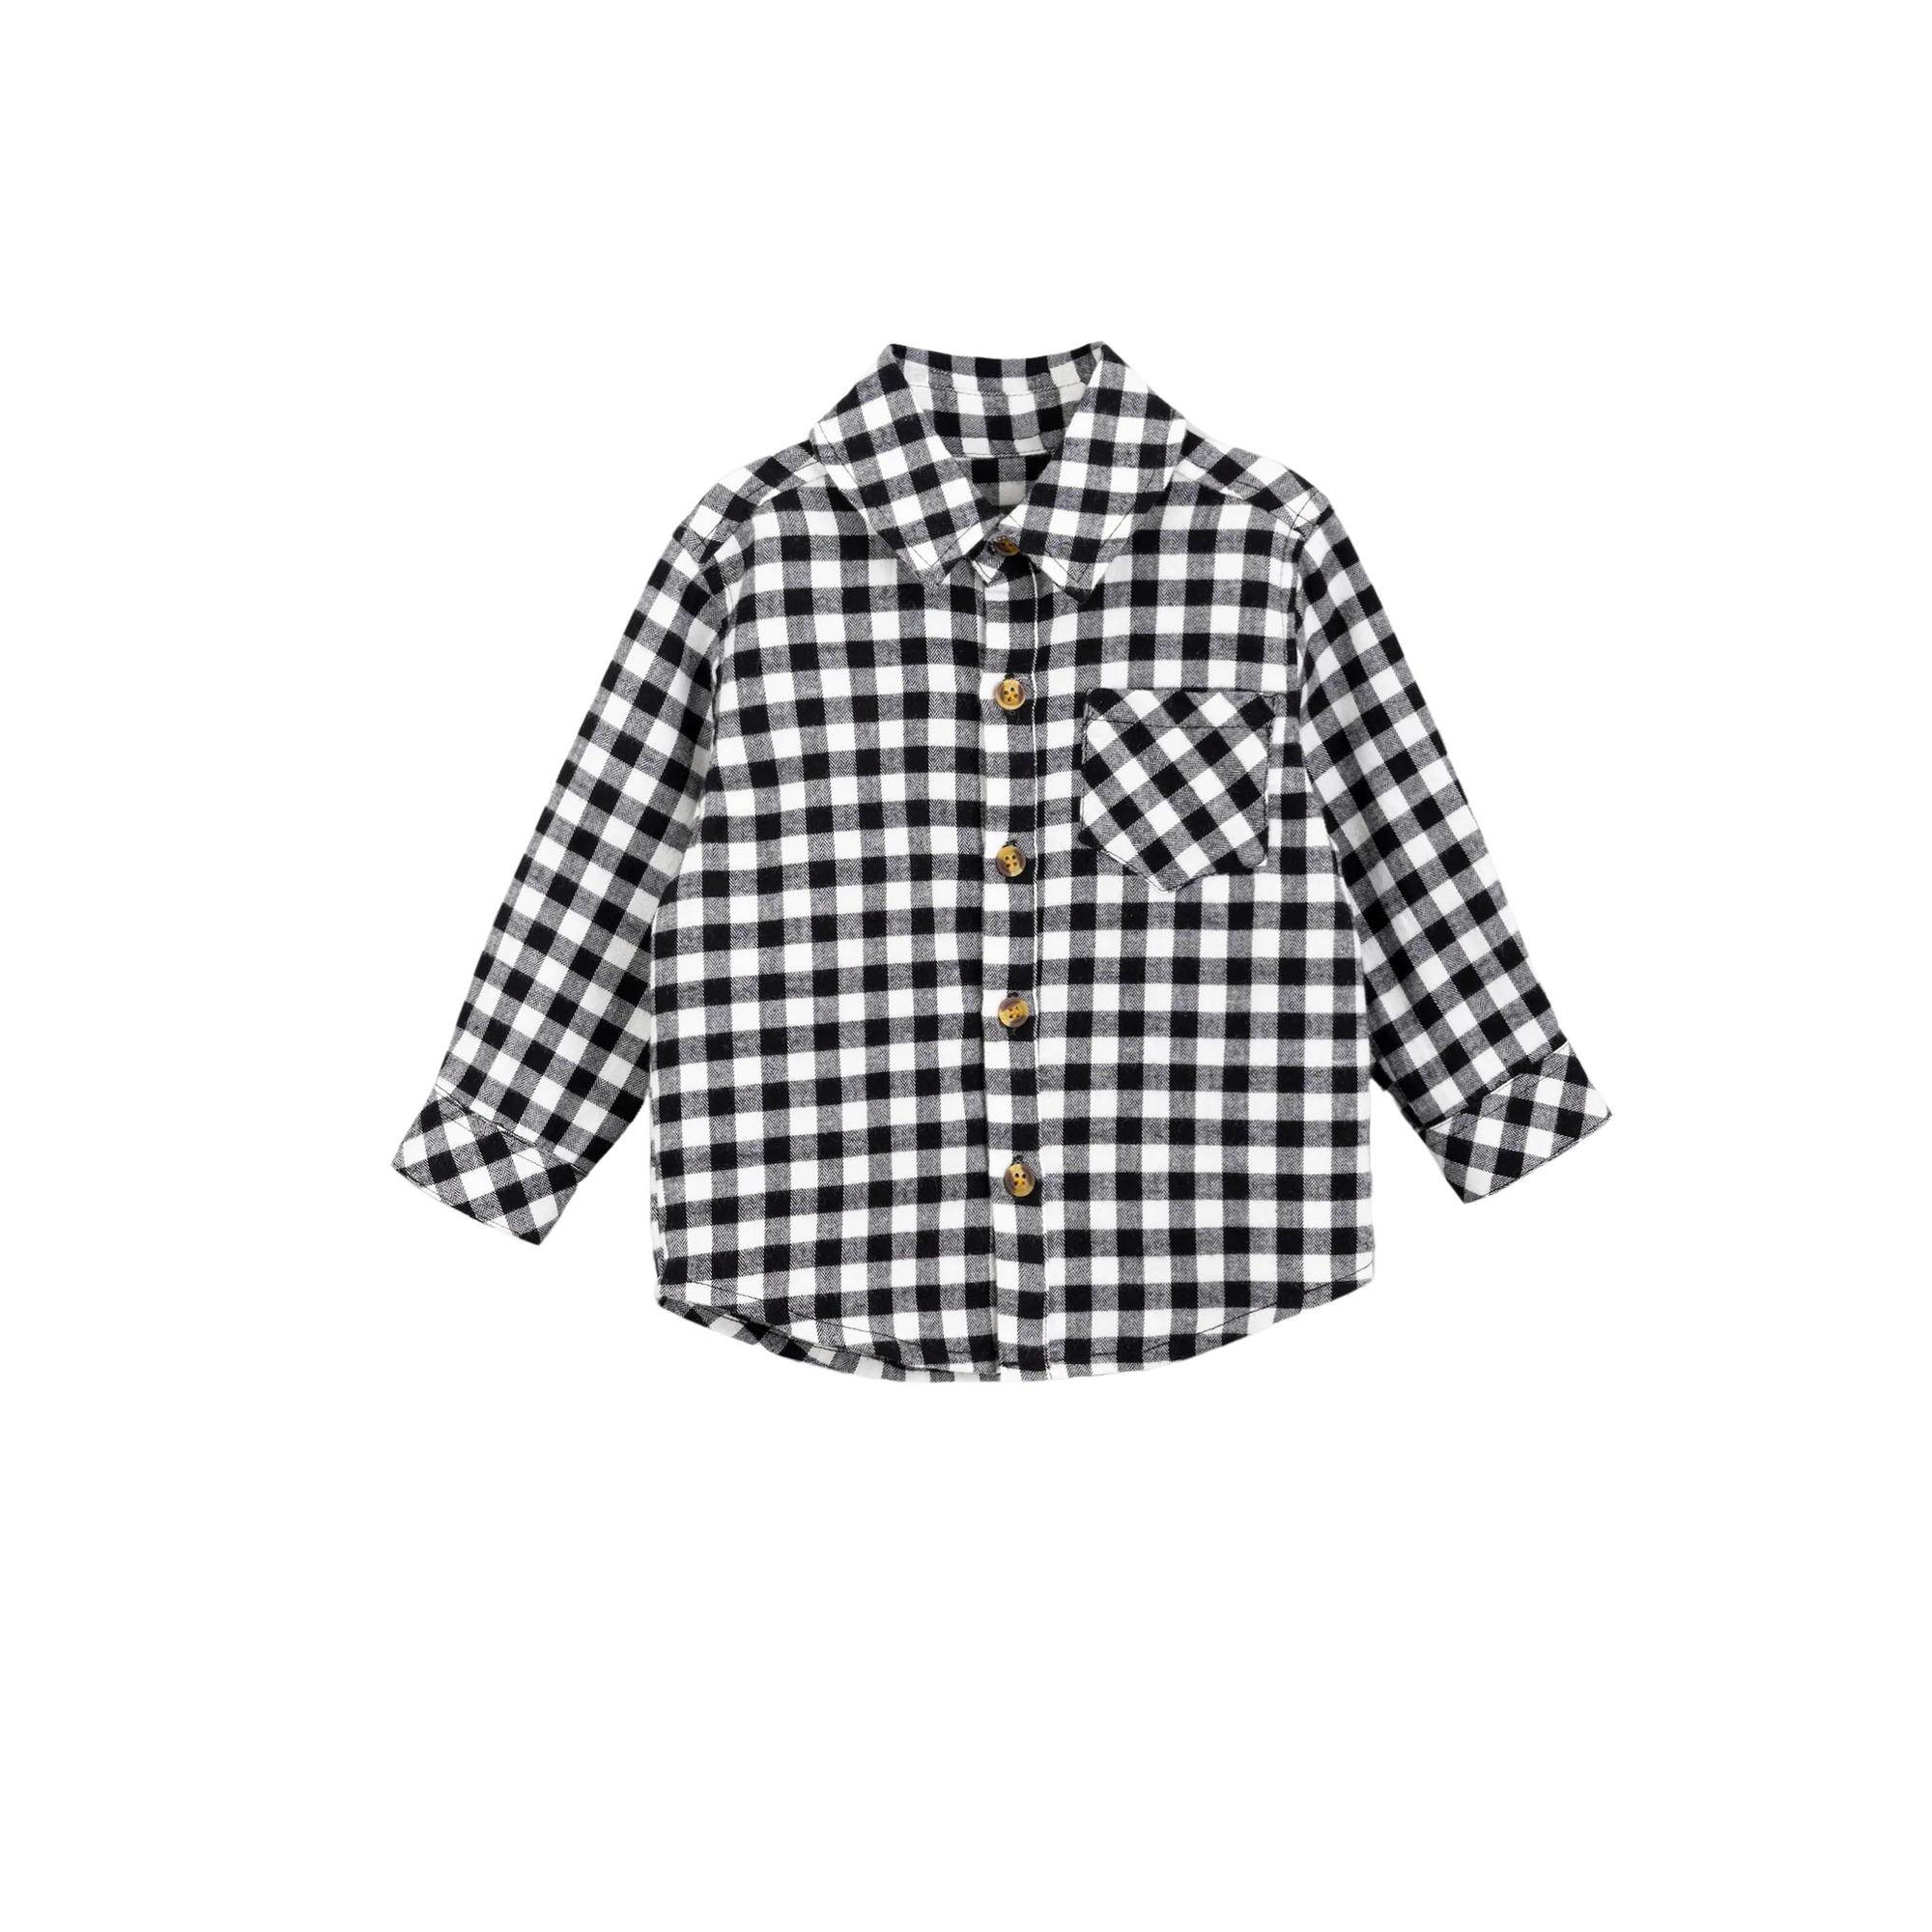 Black & White Checkered Flannel Shirt